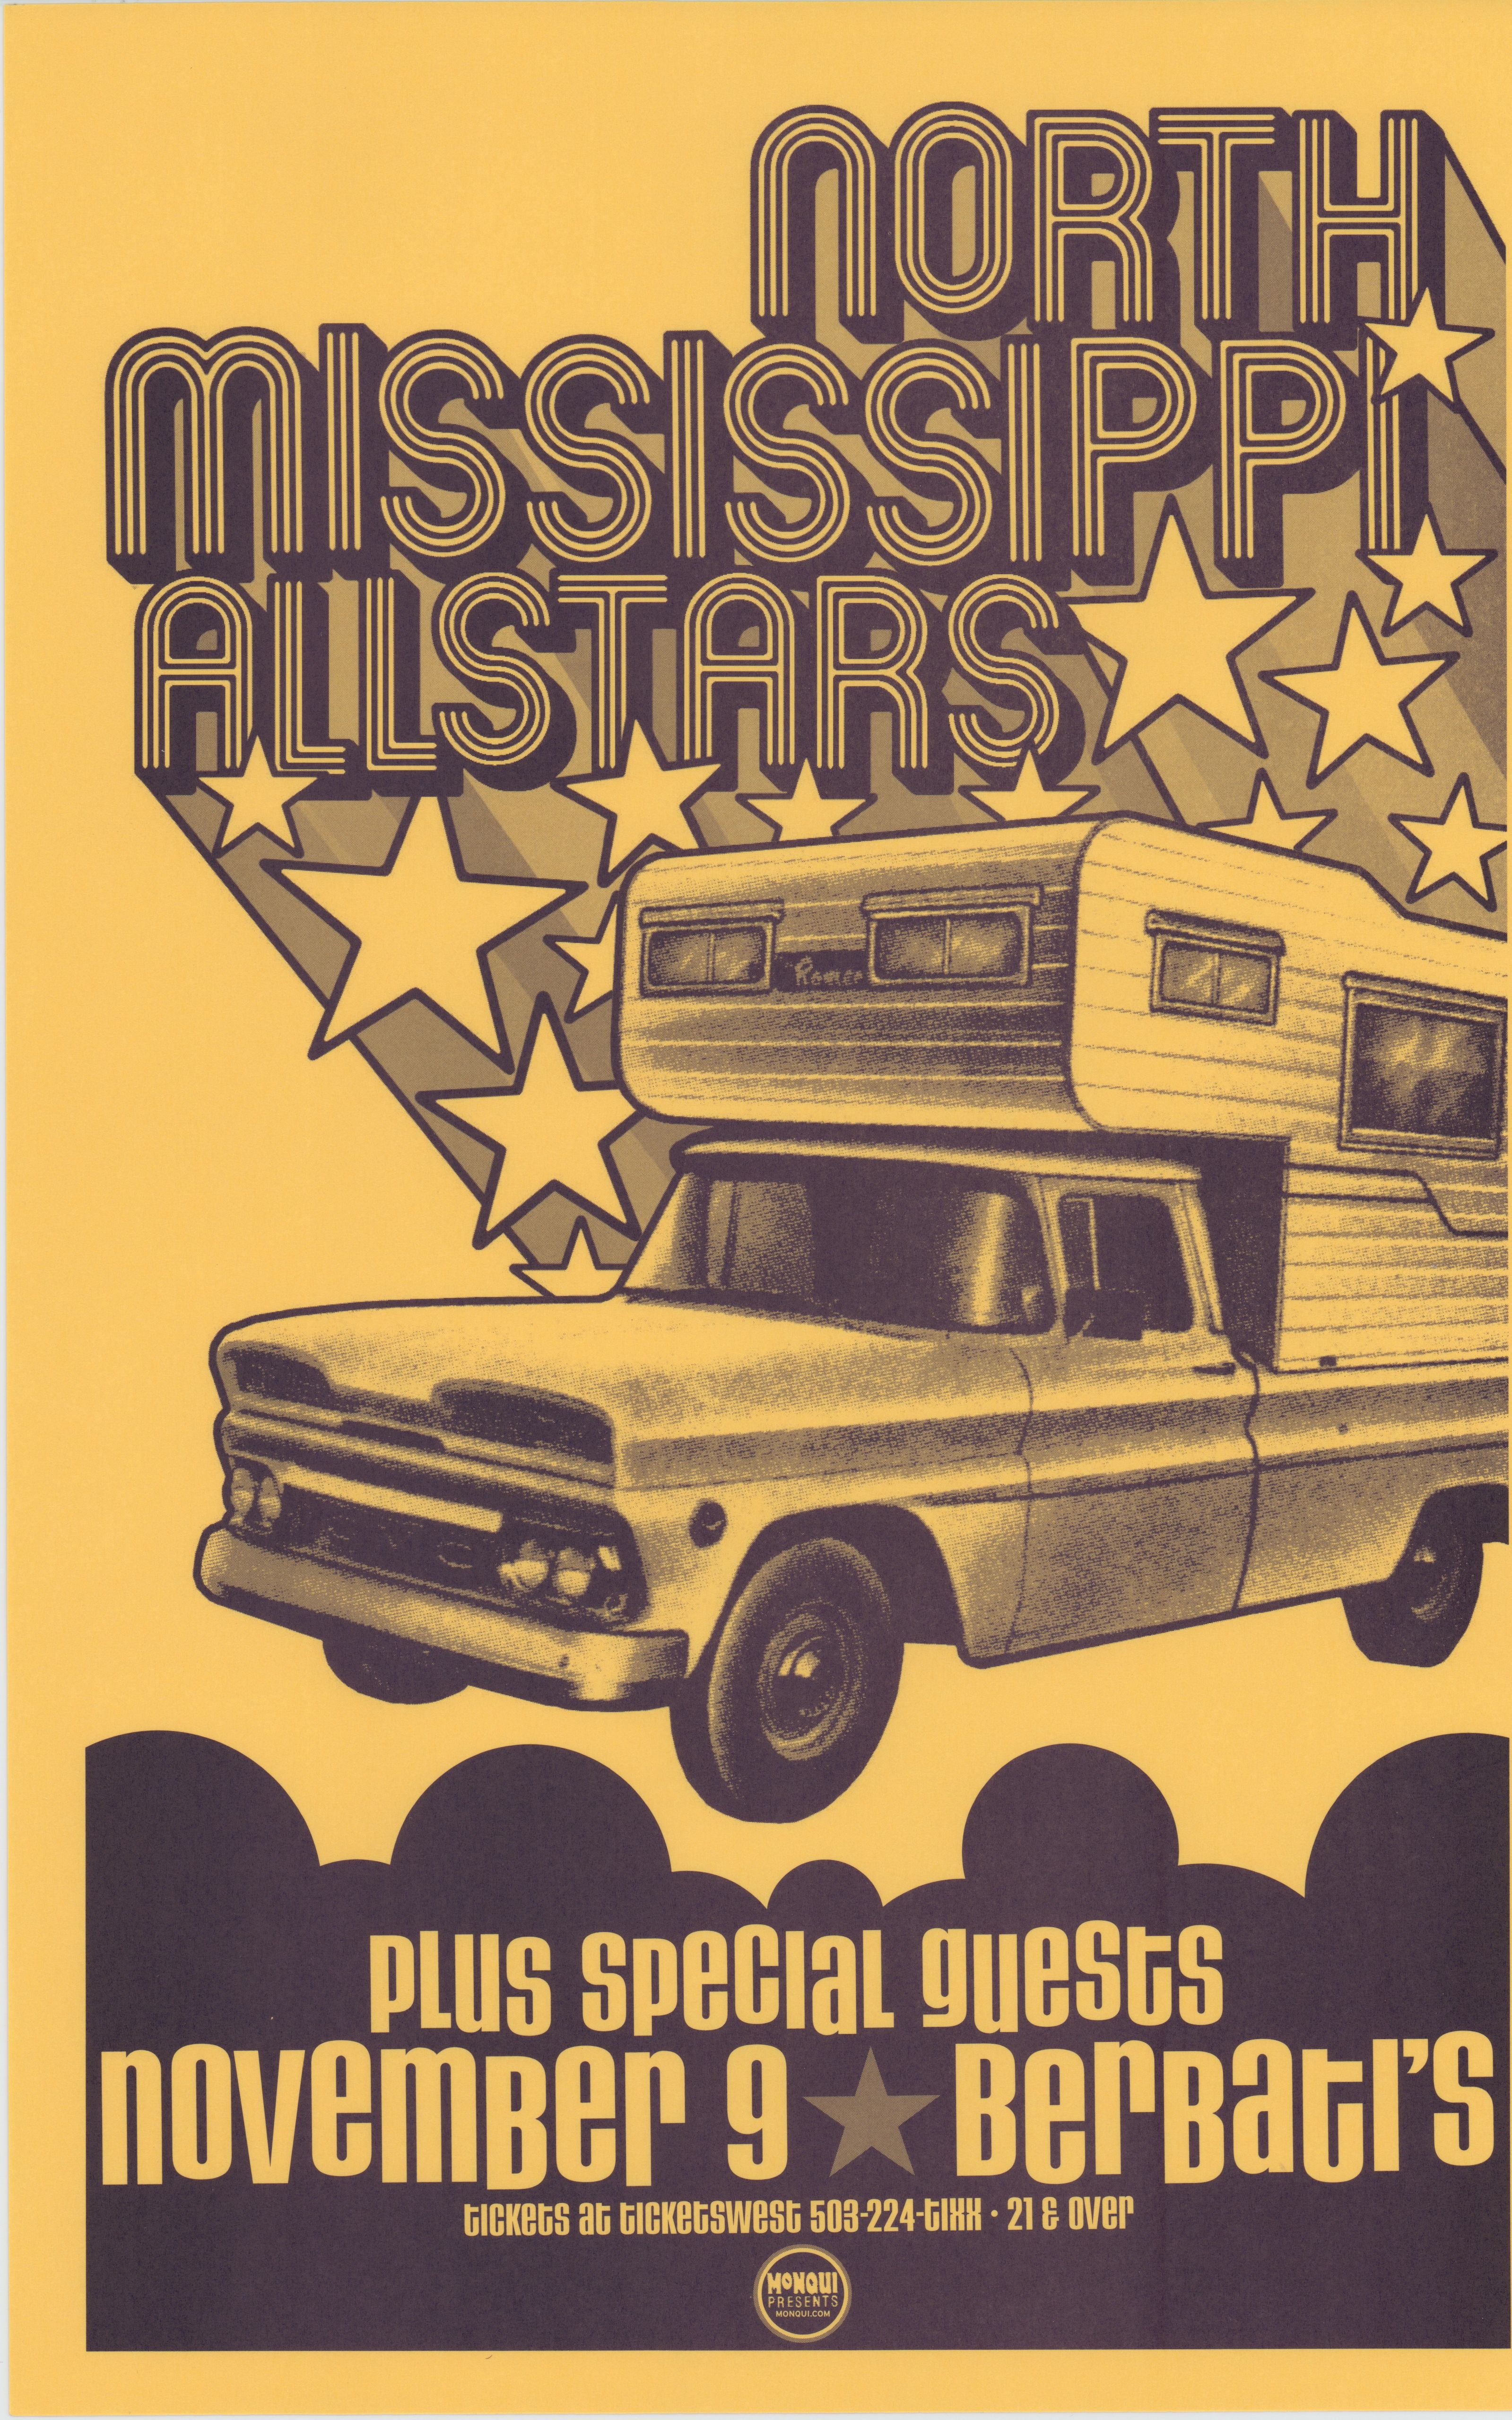 MXP-147.1 North Mississippi All Stars Berbatis 2003 Concert Poster